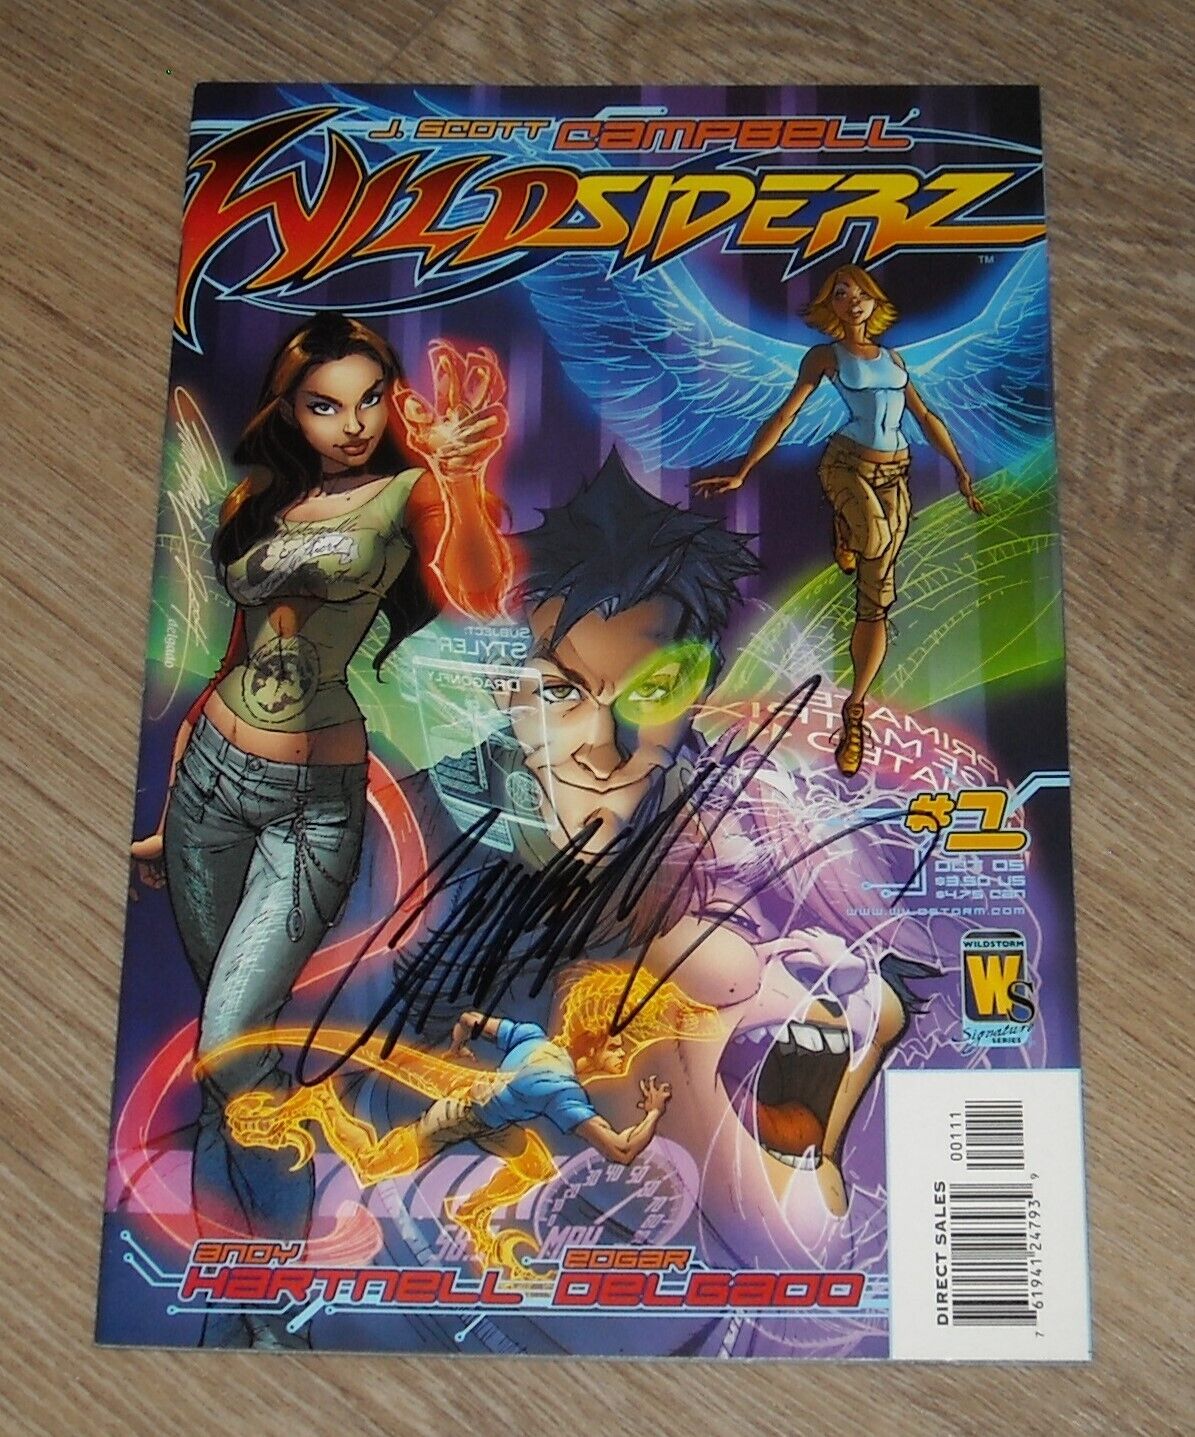 J SCOTT CAMPBELL WILDSIDERZ # 1 WILDSTORM DC COMICS October 2005 SIGNED COVER